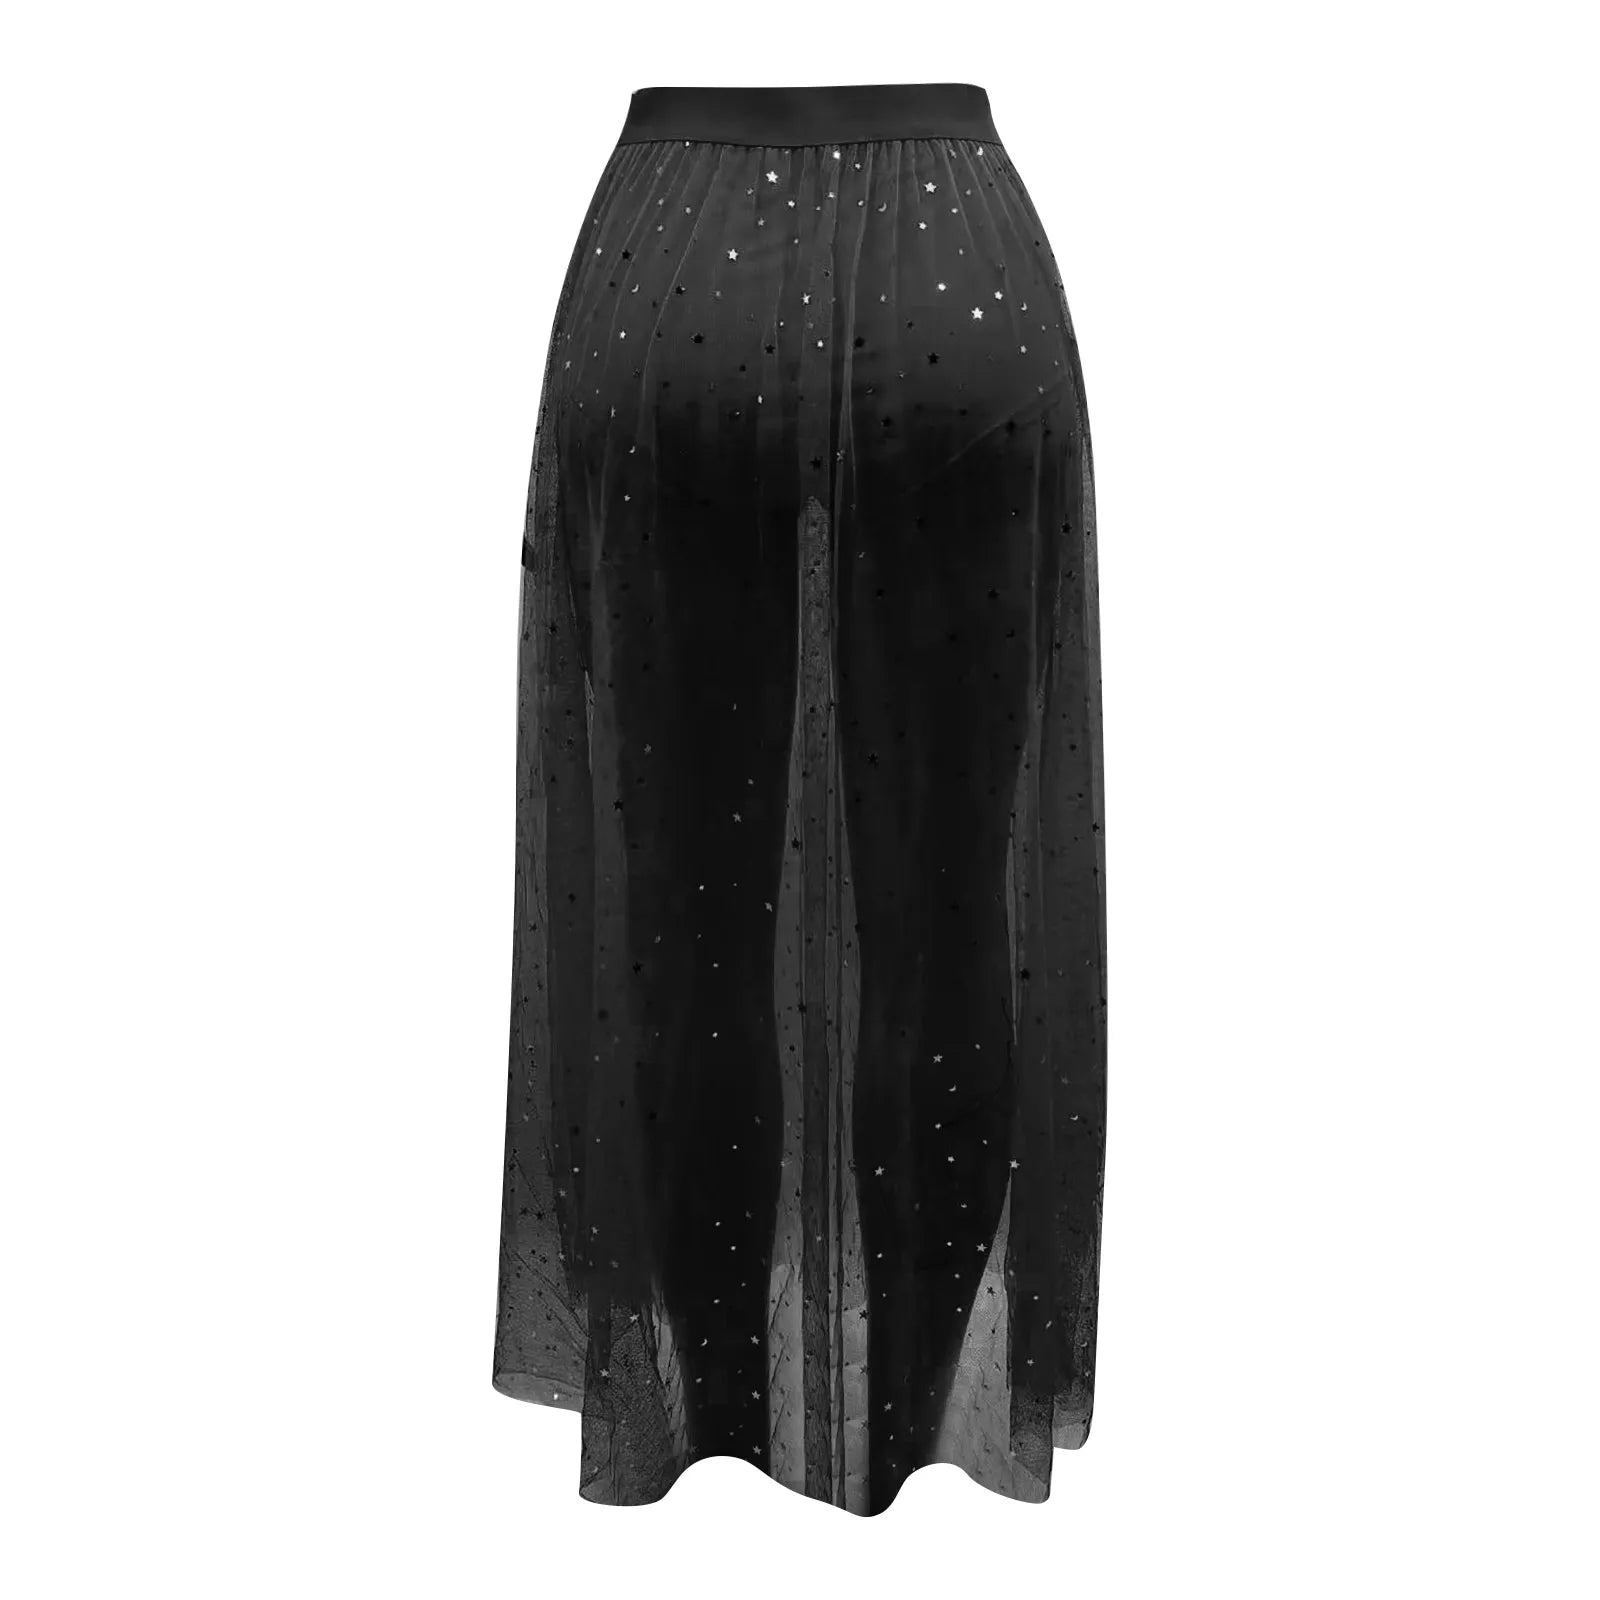 TEEK - Mesh High Waist Galaxy Skirt SKIRT theteekdotcom Black S 